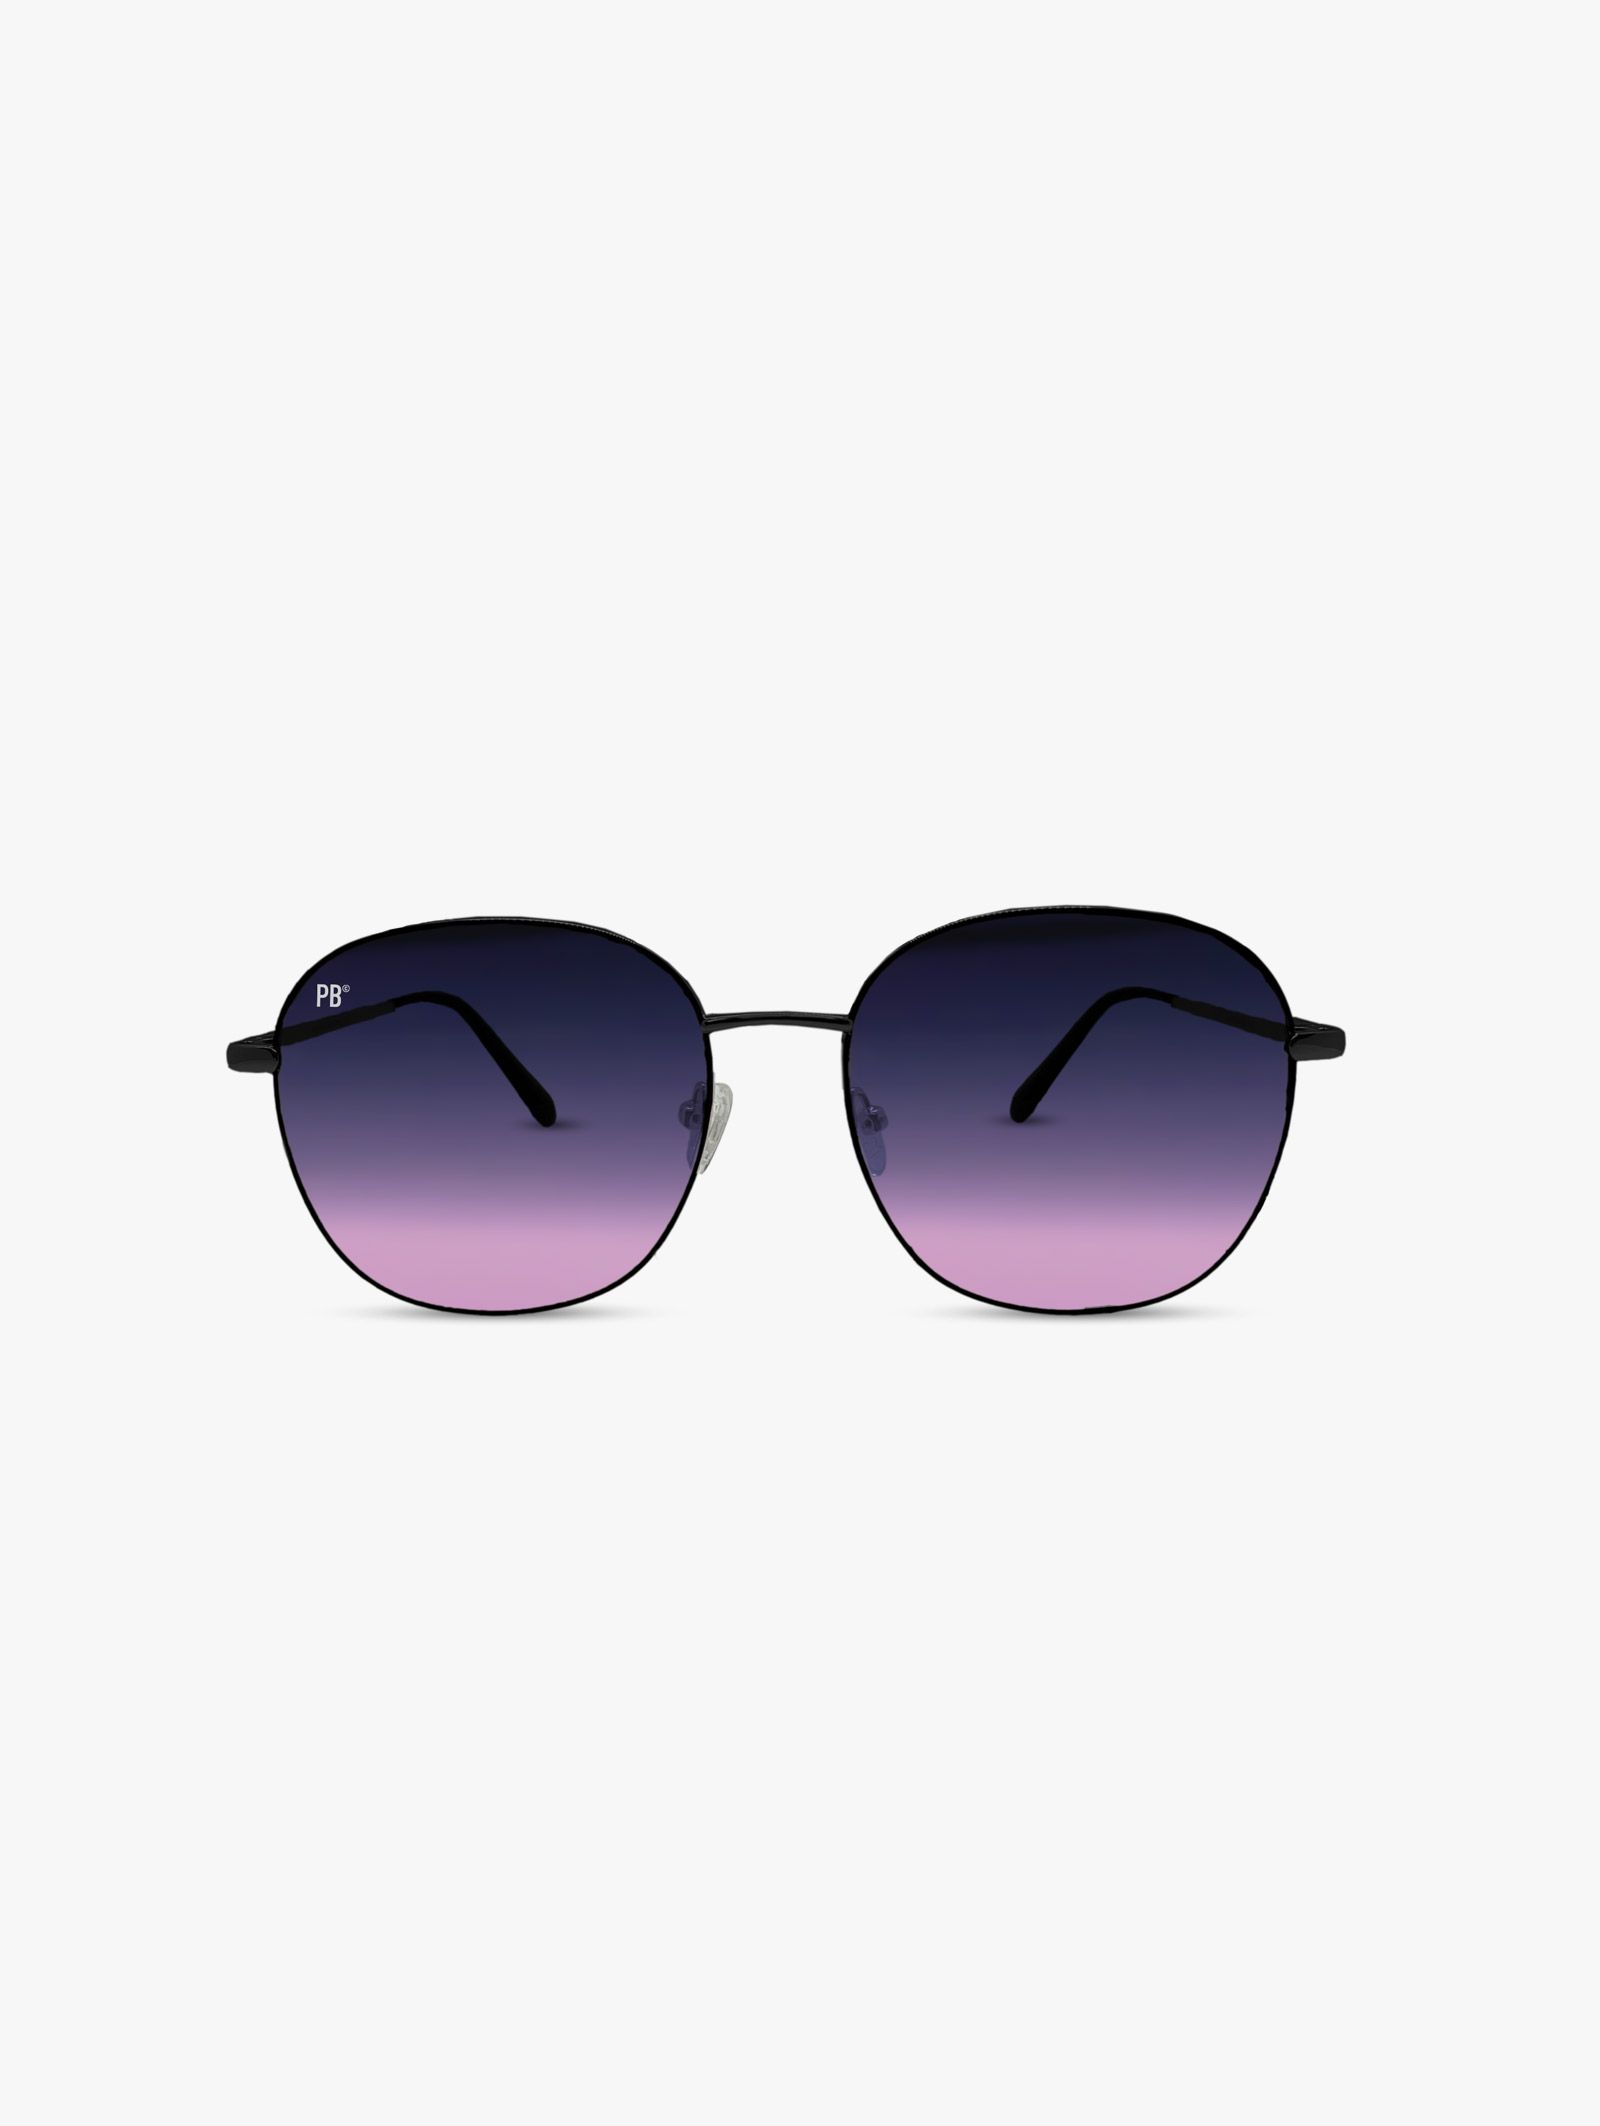 Damen Sonnebrillen PB Sunglasses